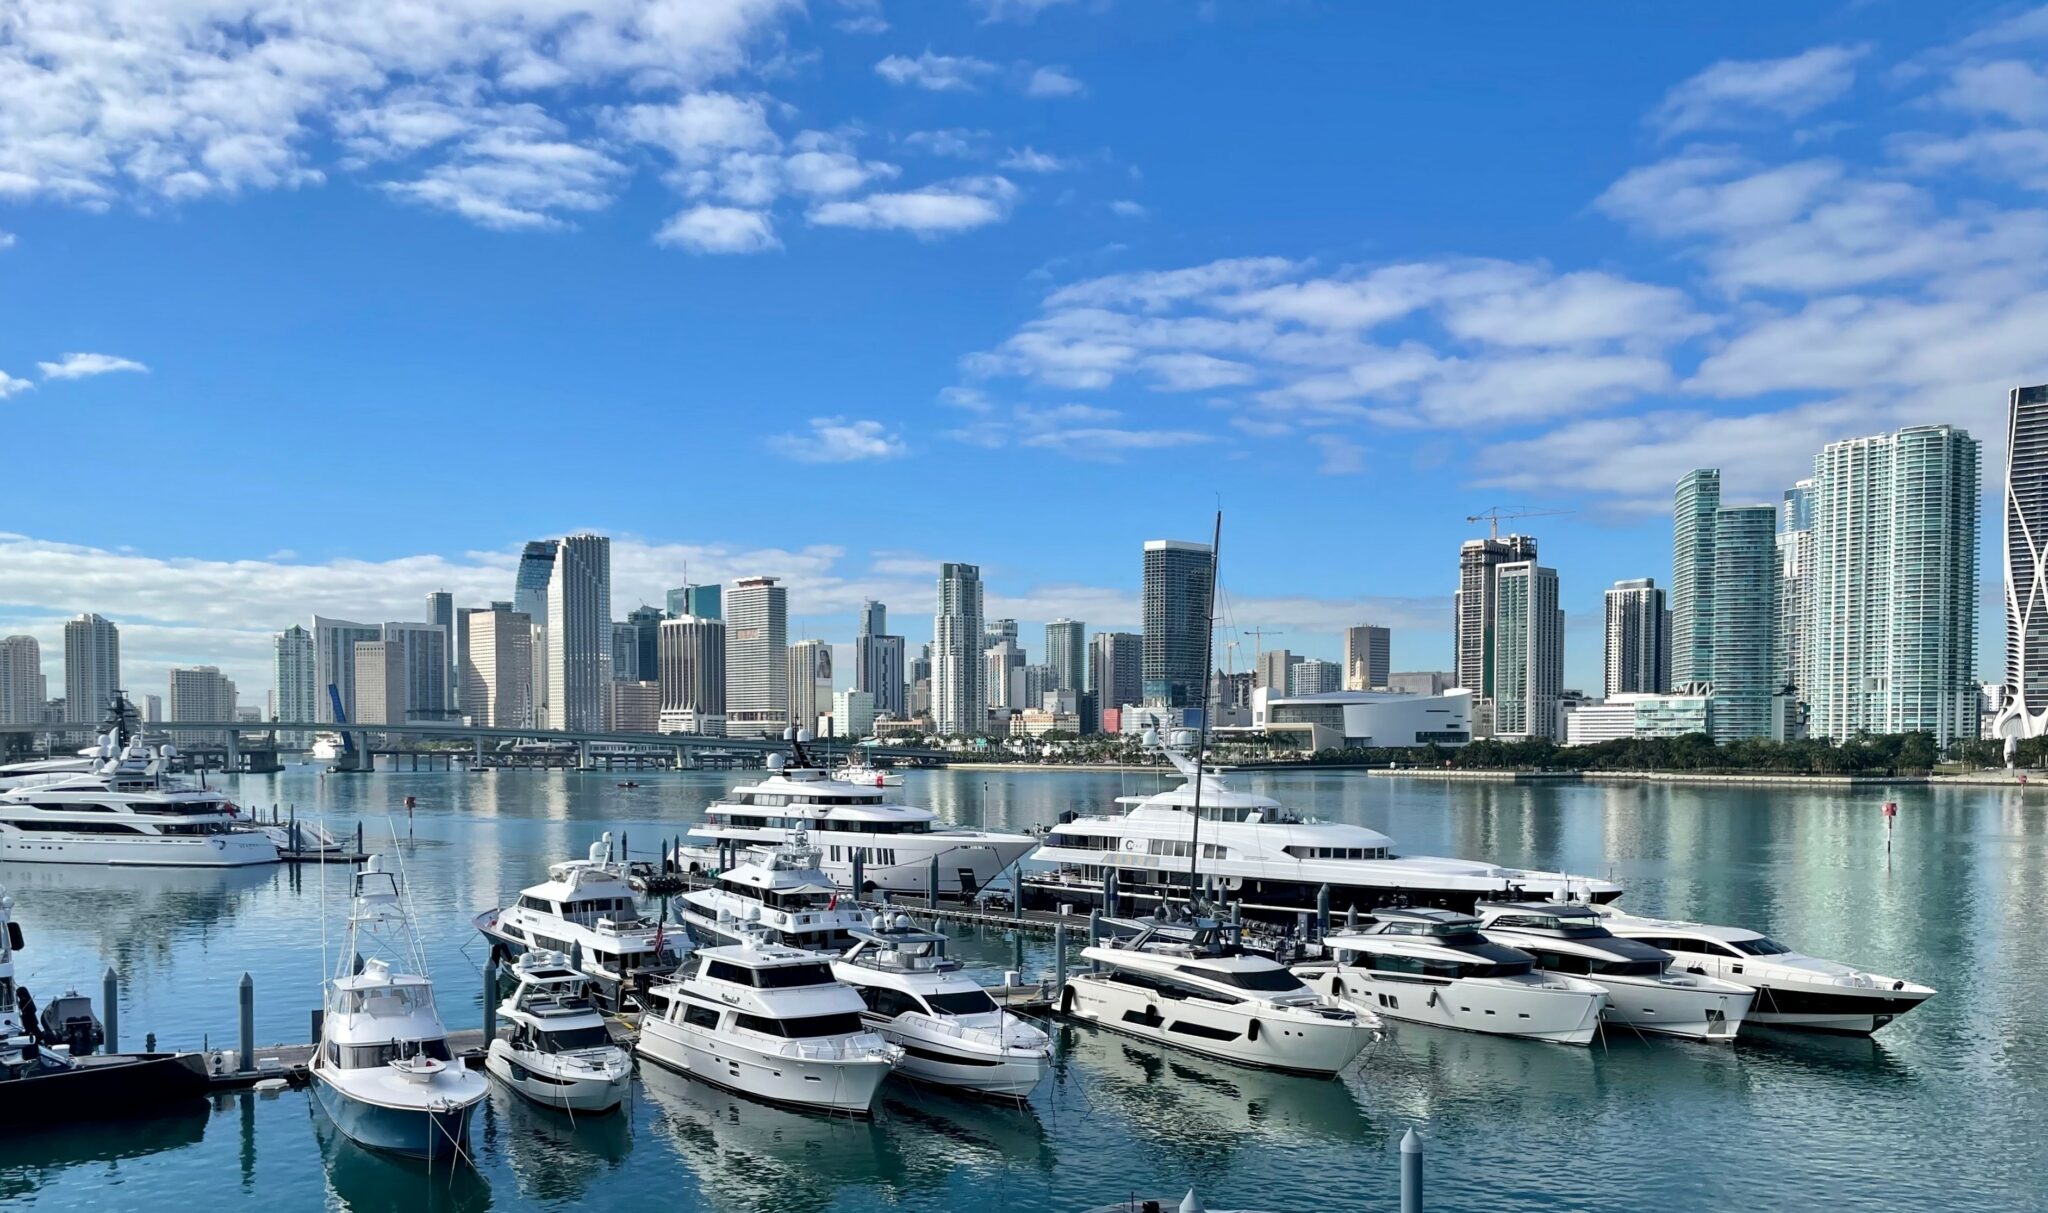 Miami is The Dubai of the Western Hemisphere